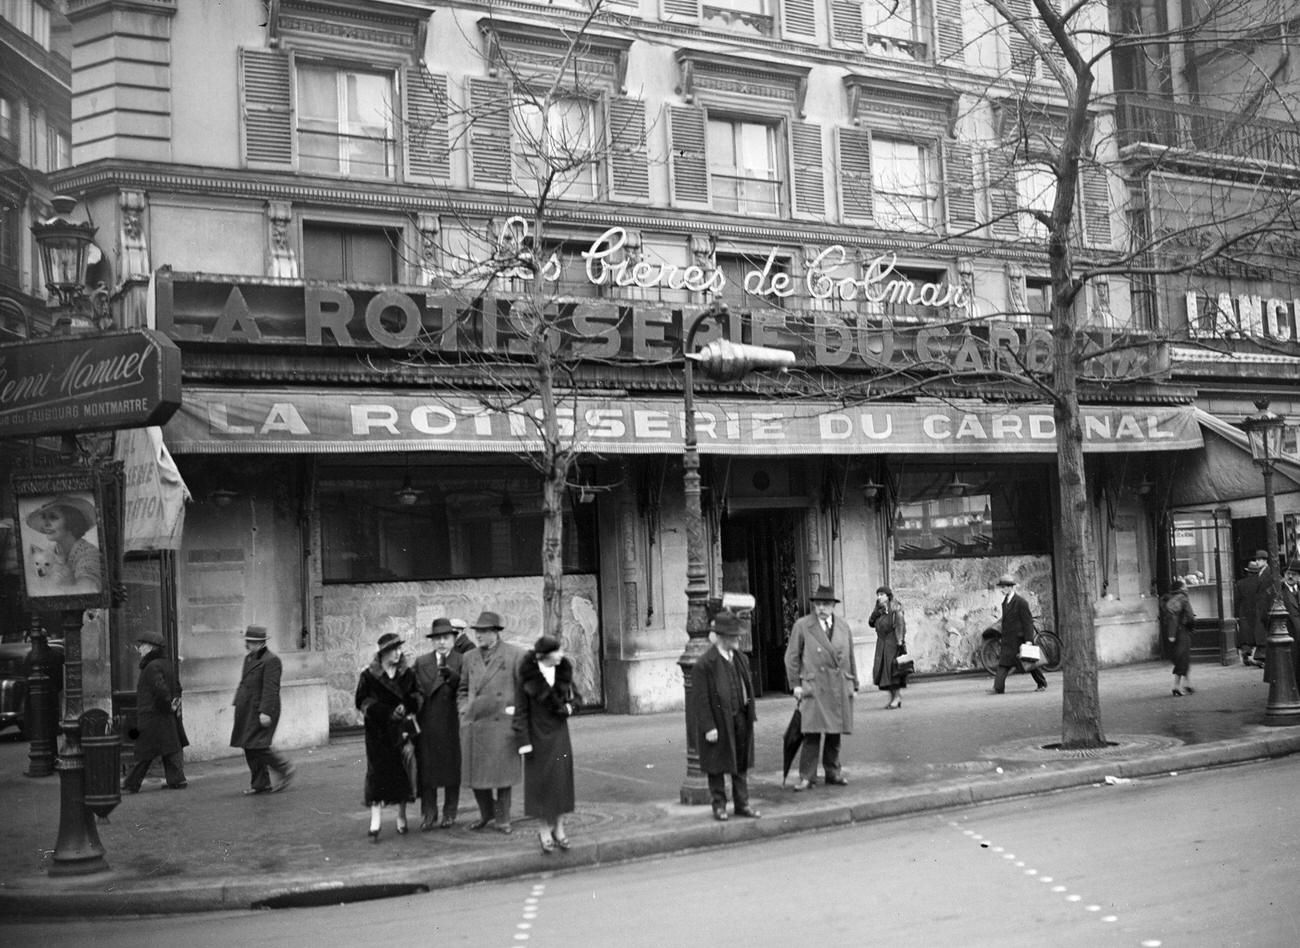 'La Rotisserie du Cardinal' Cafe Closure, Paris Boulevards, 2 February 1935